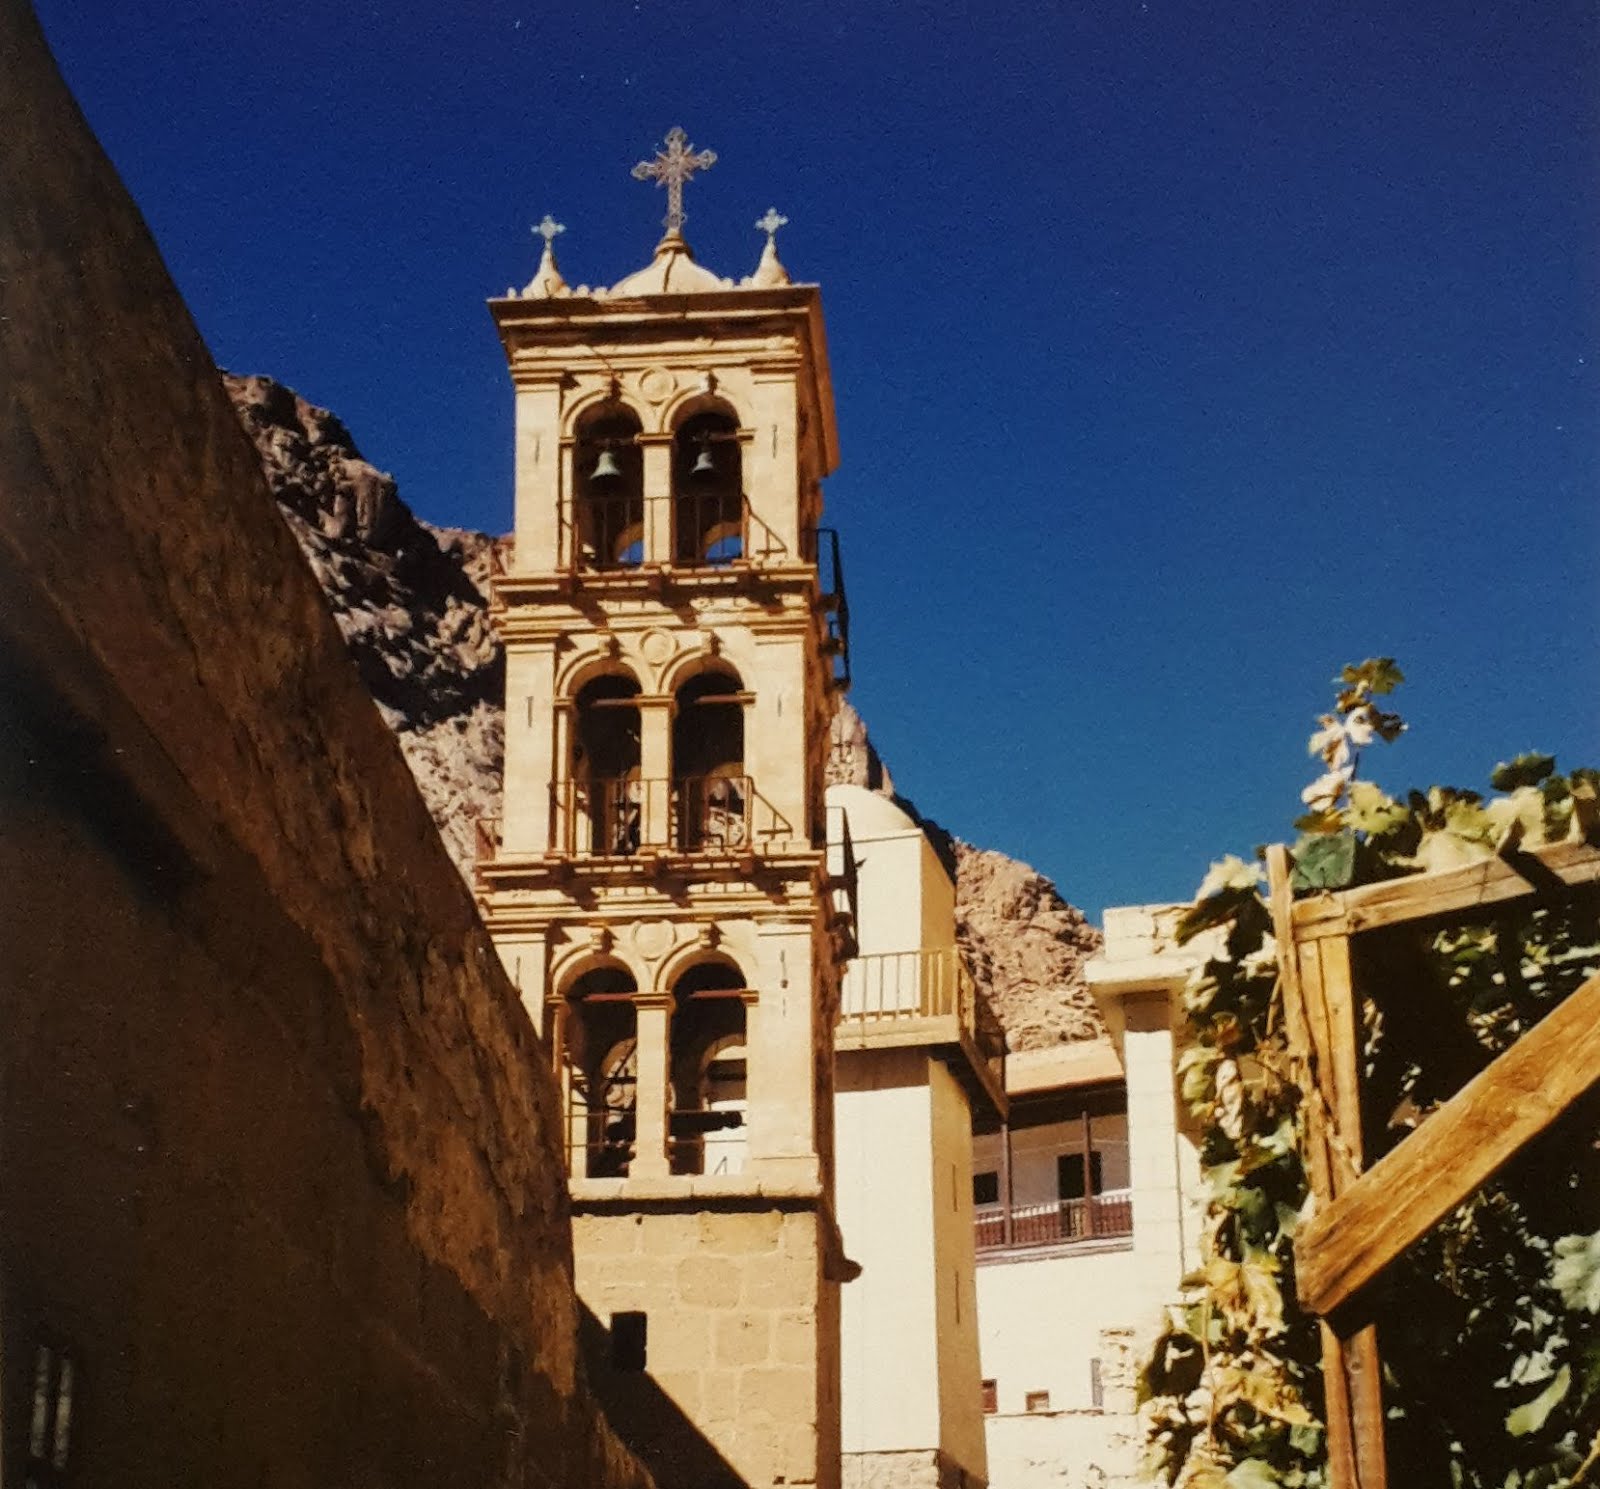 Katharinenkloster im Sinai - ein UNESCO-Welterbe